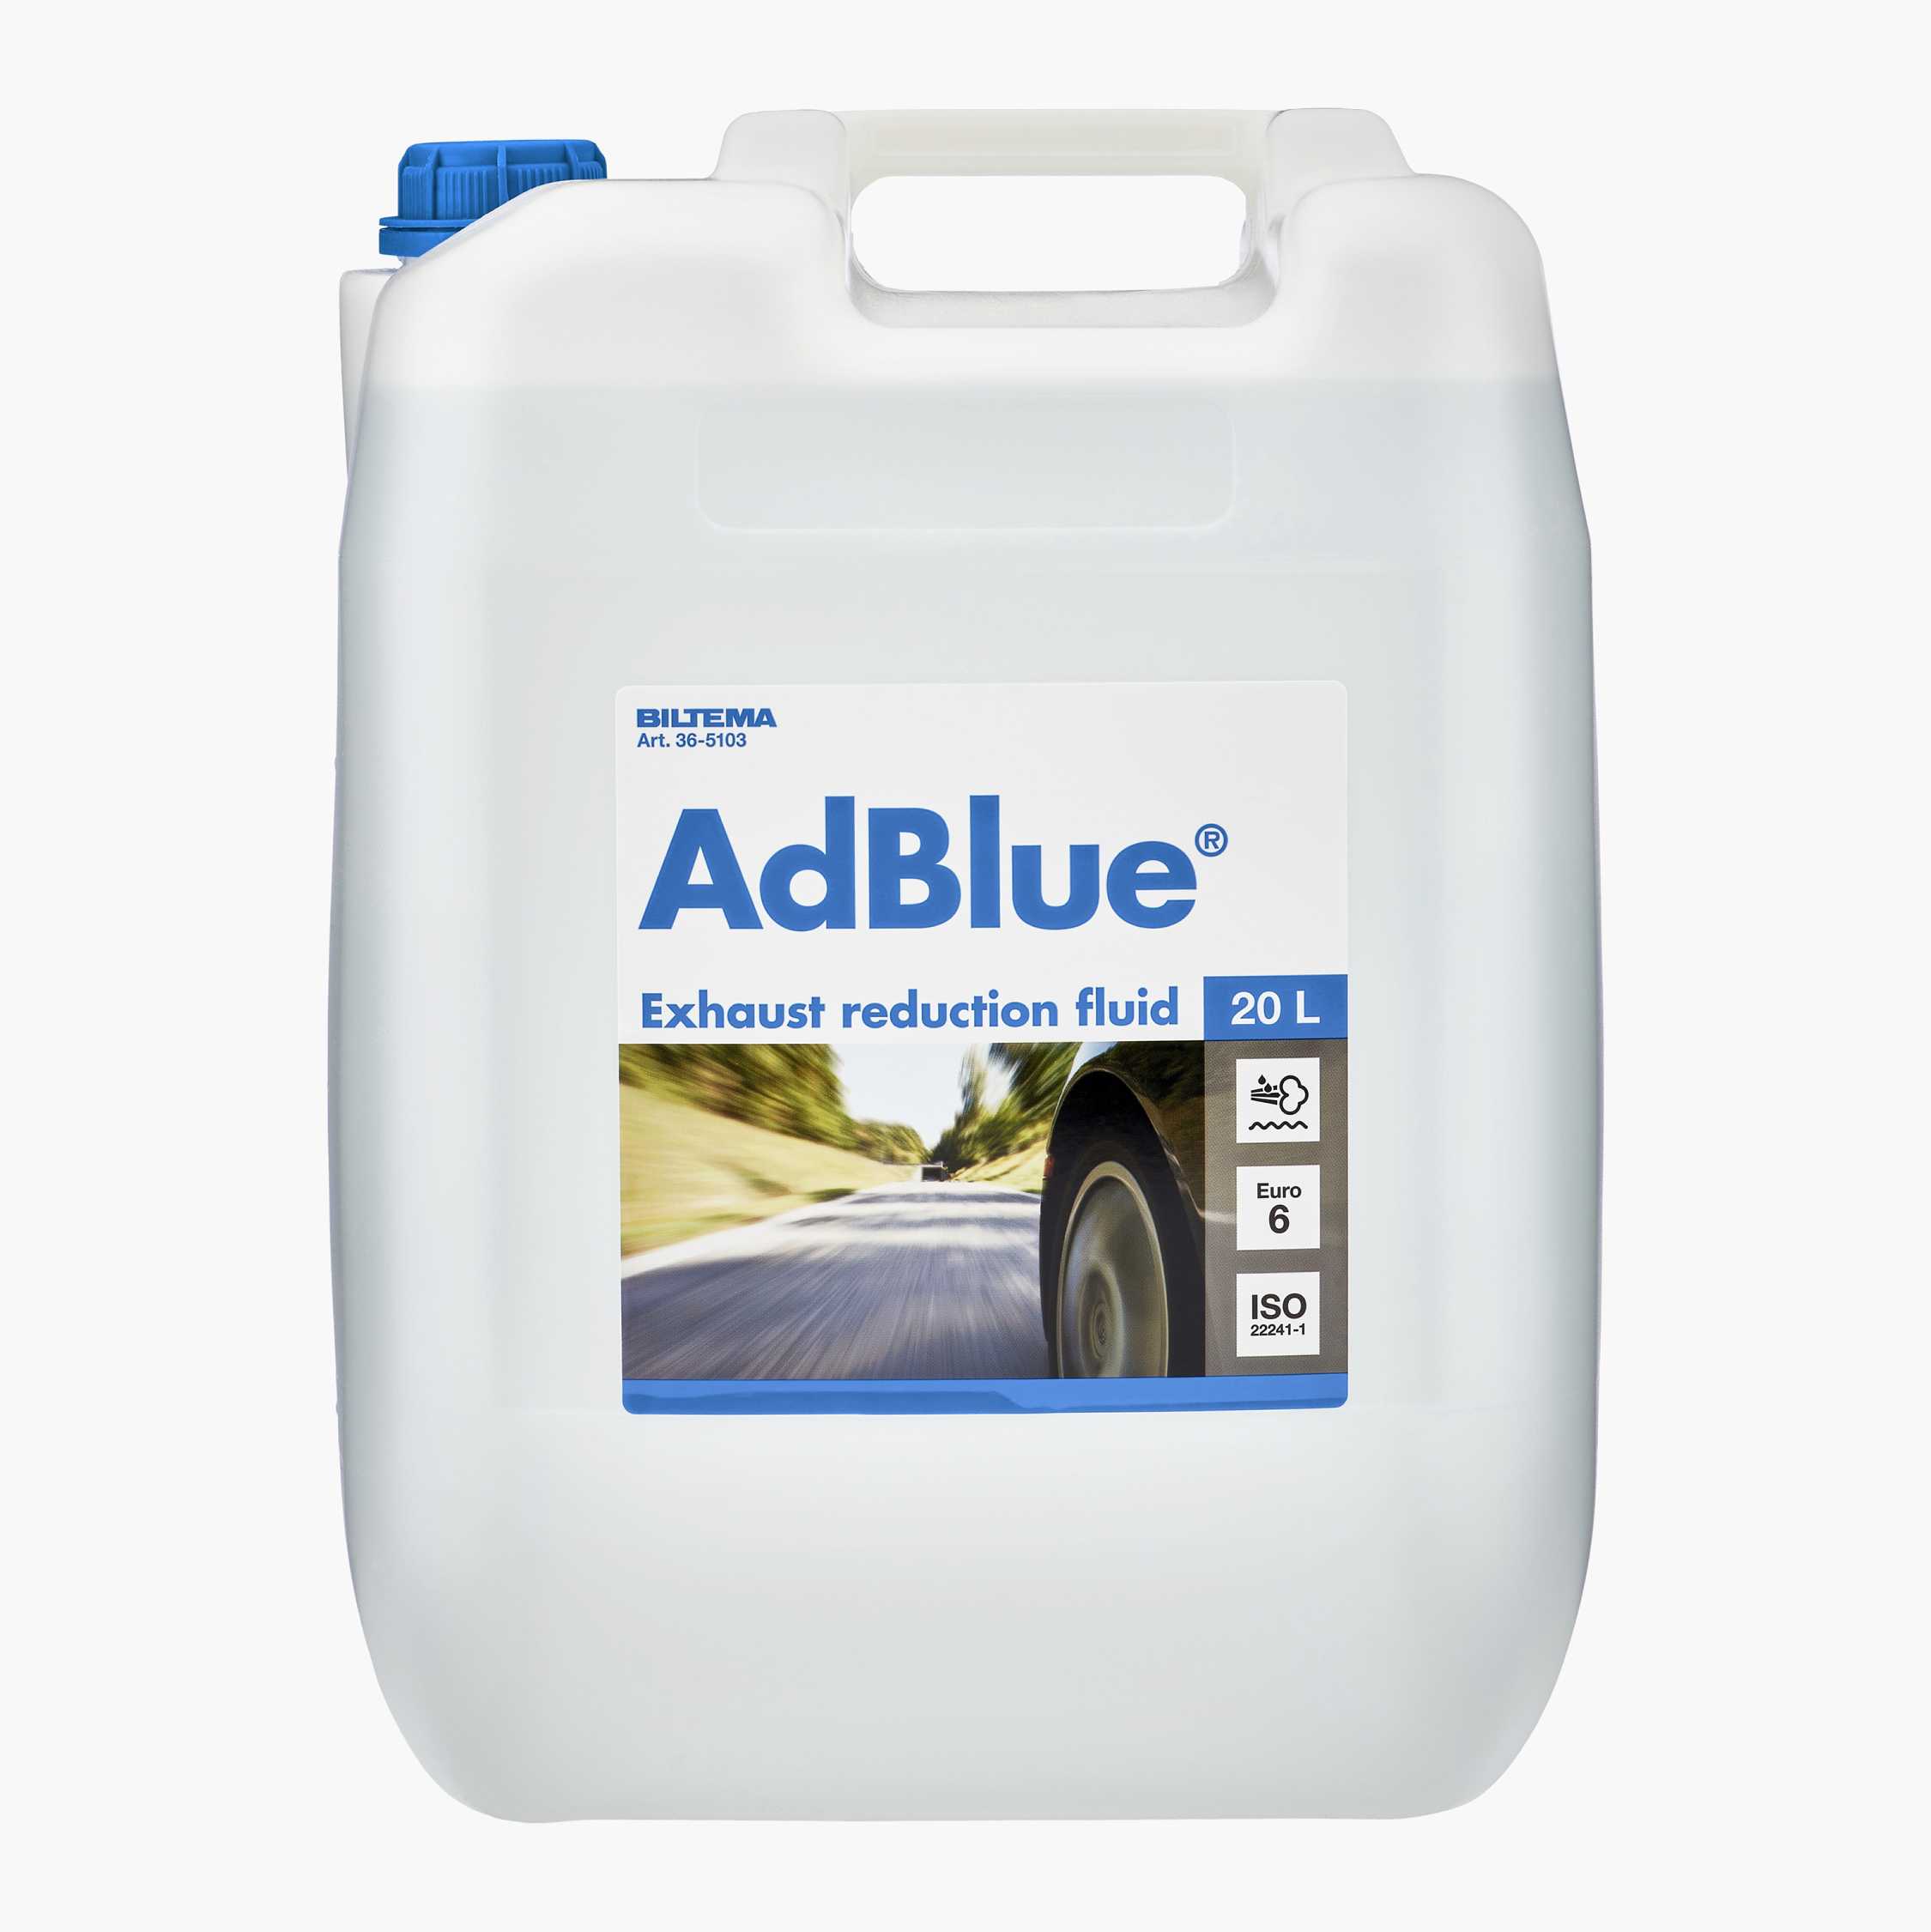 AdBlue - 10 Liters